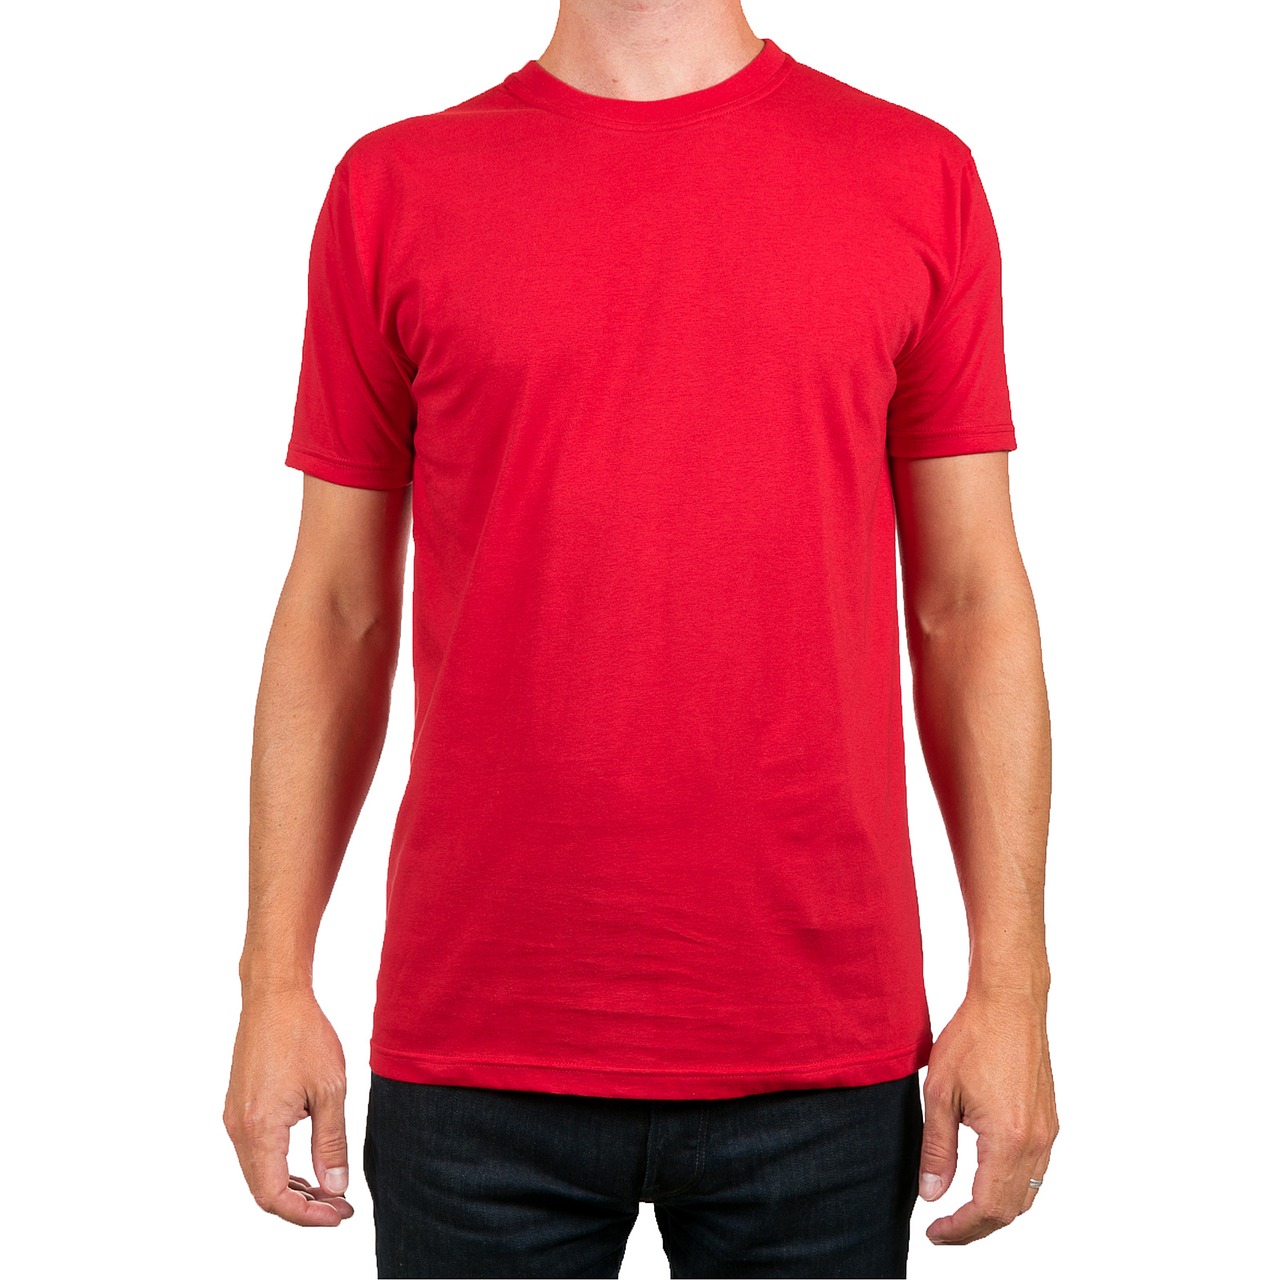 t-shirt red man free photo